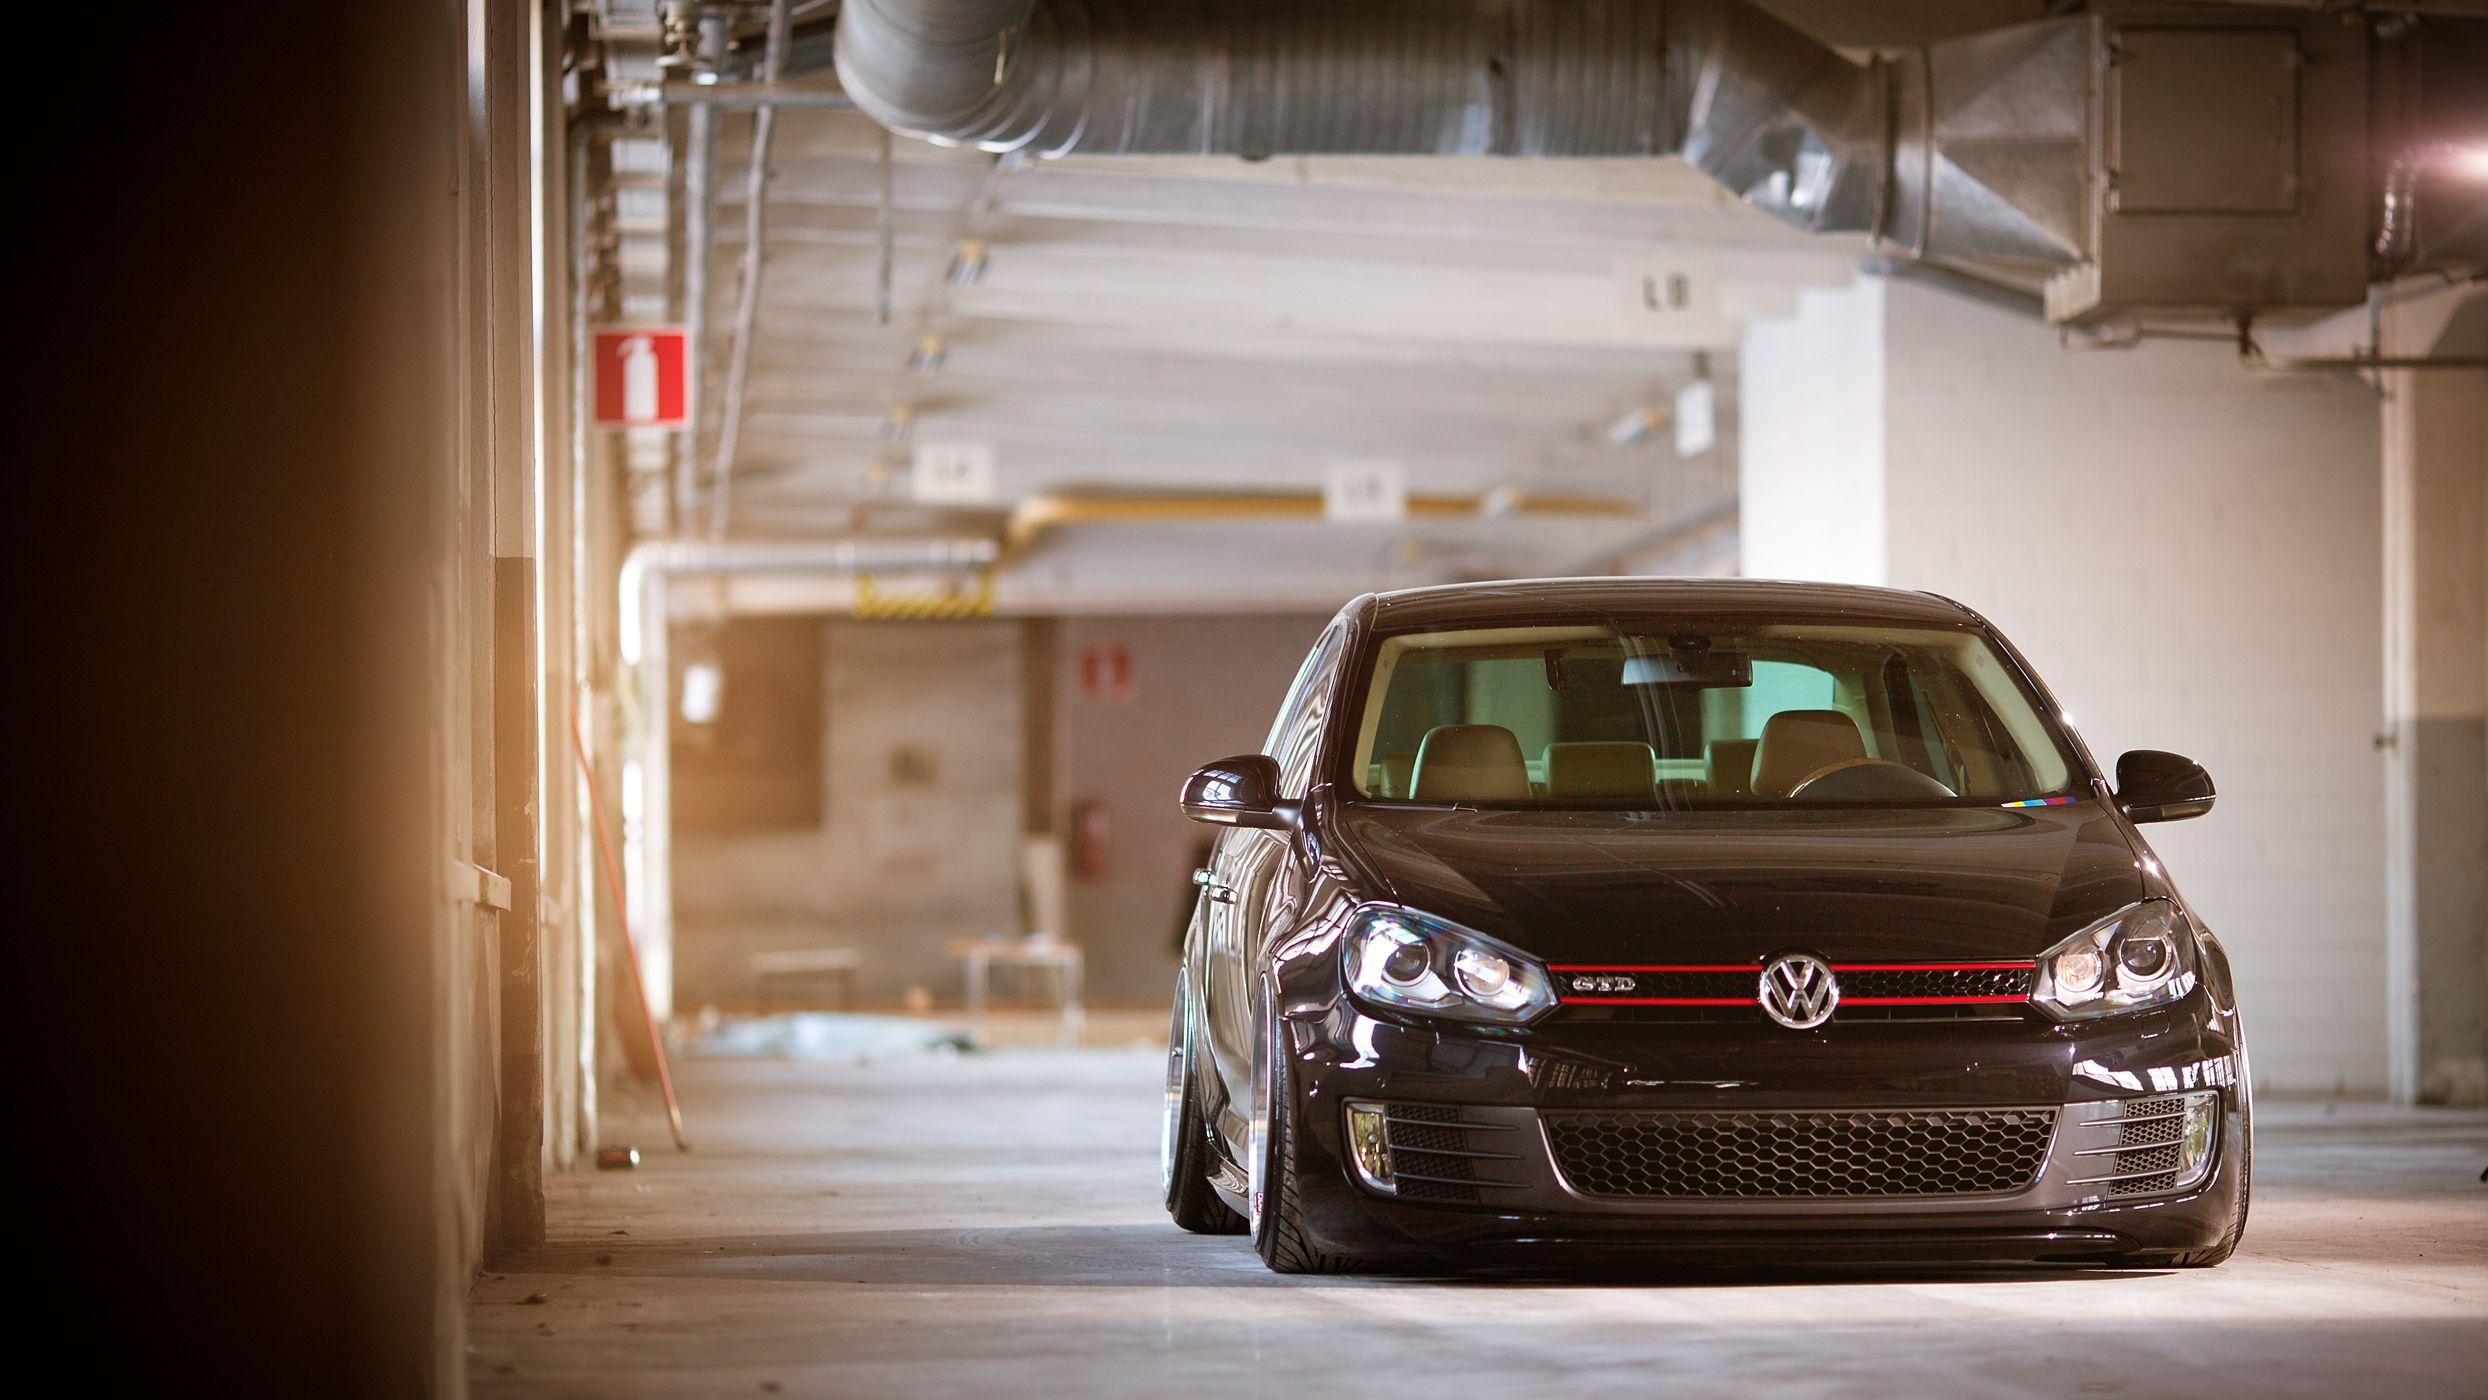 Volkswagen Golf HD Wallpaper and Background Image